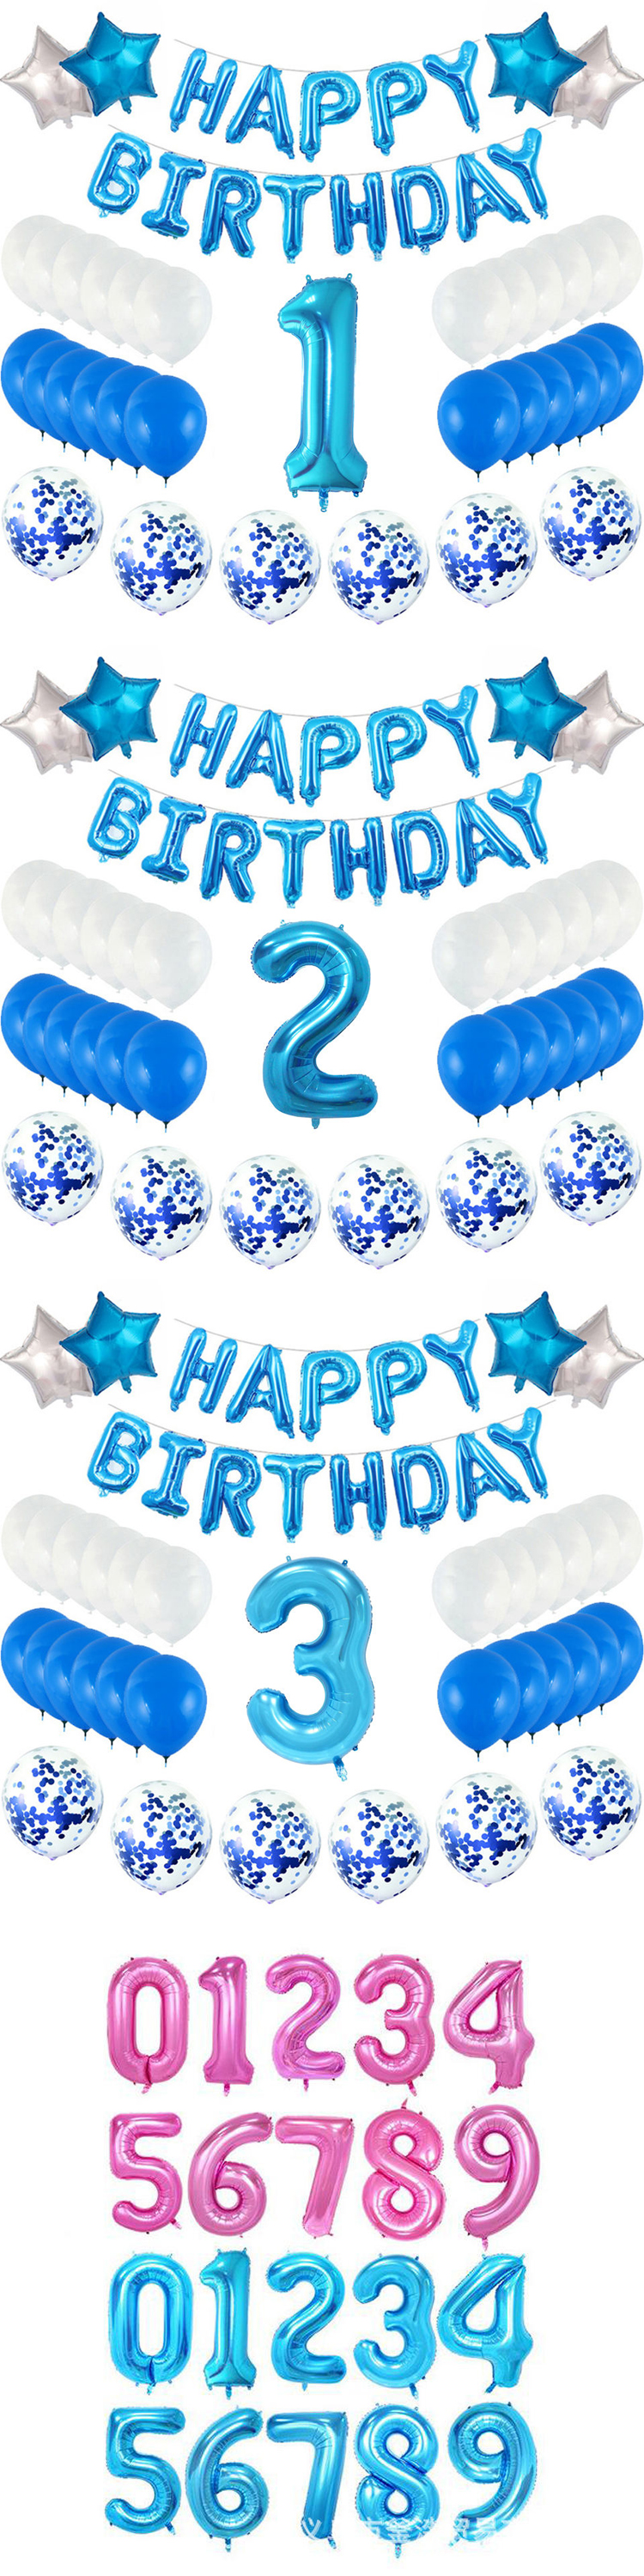 PAFU boy's birthday party supplies happy birthday heart star foil balloon blue confetti latex balloon kids birthday deco